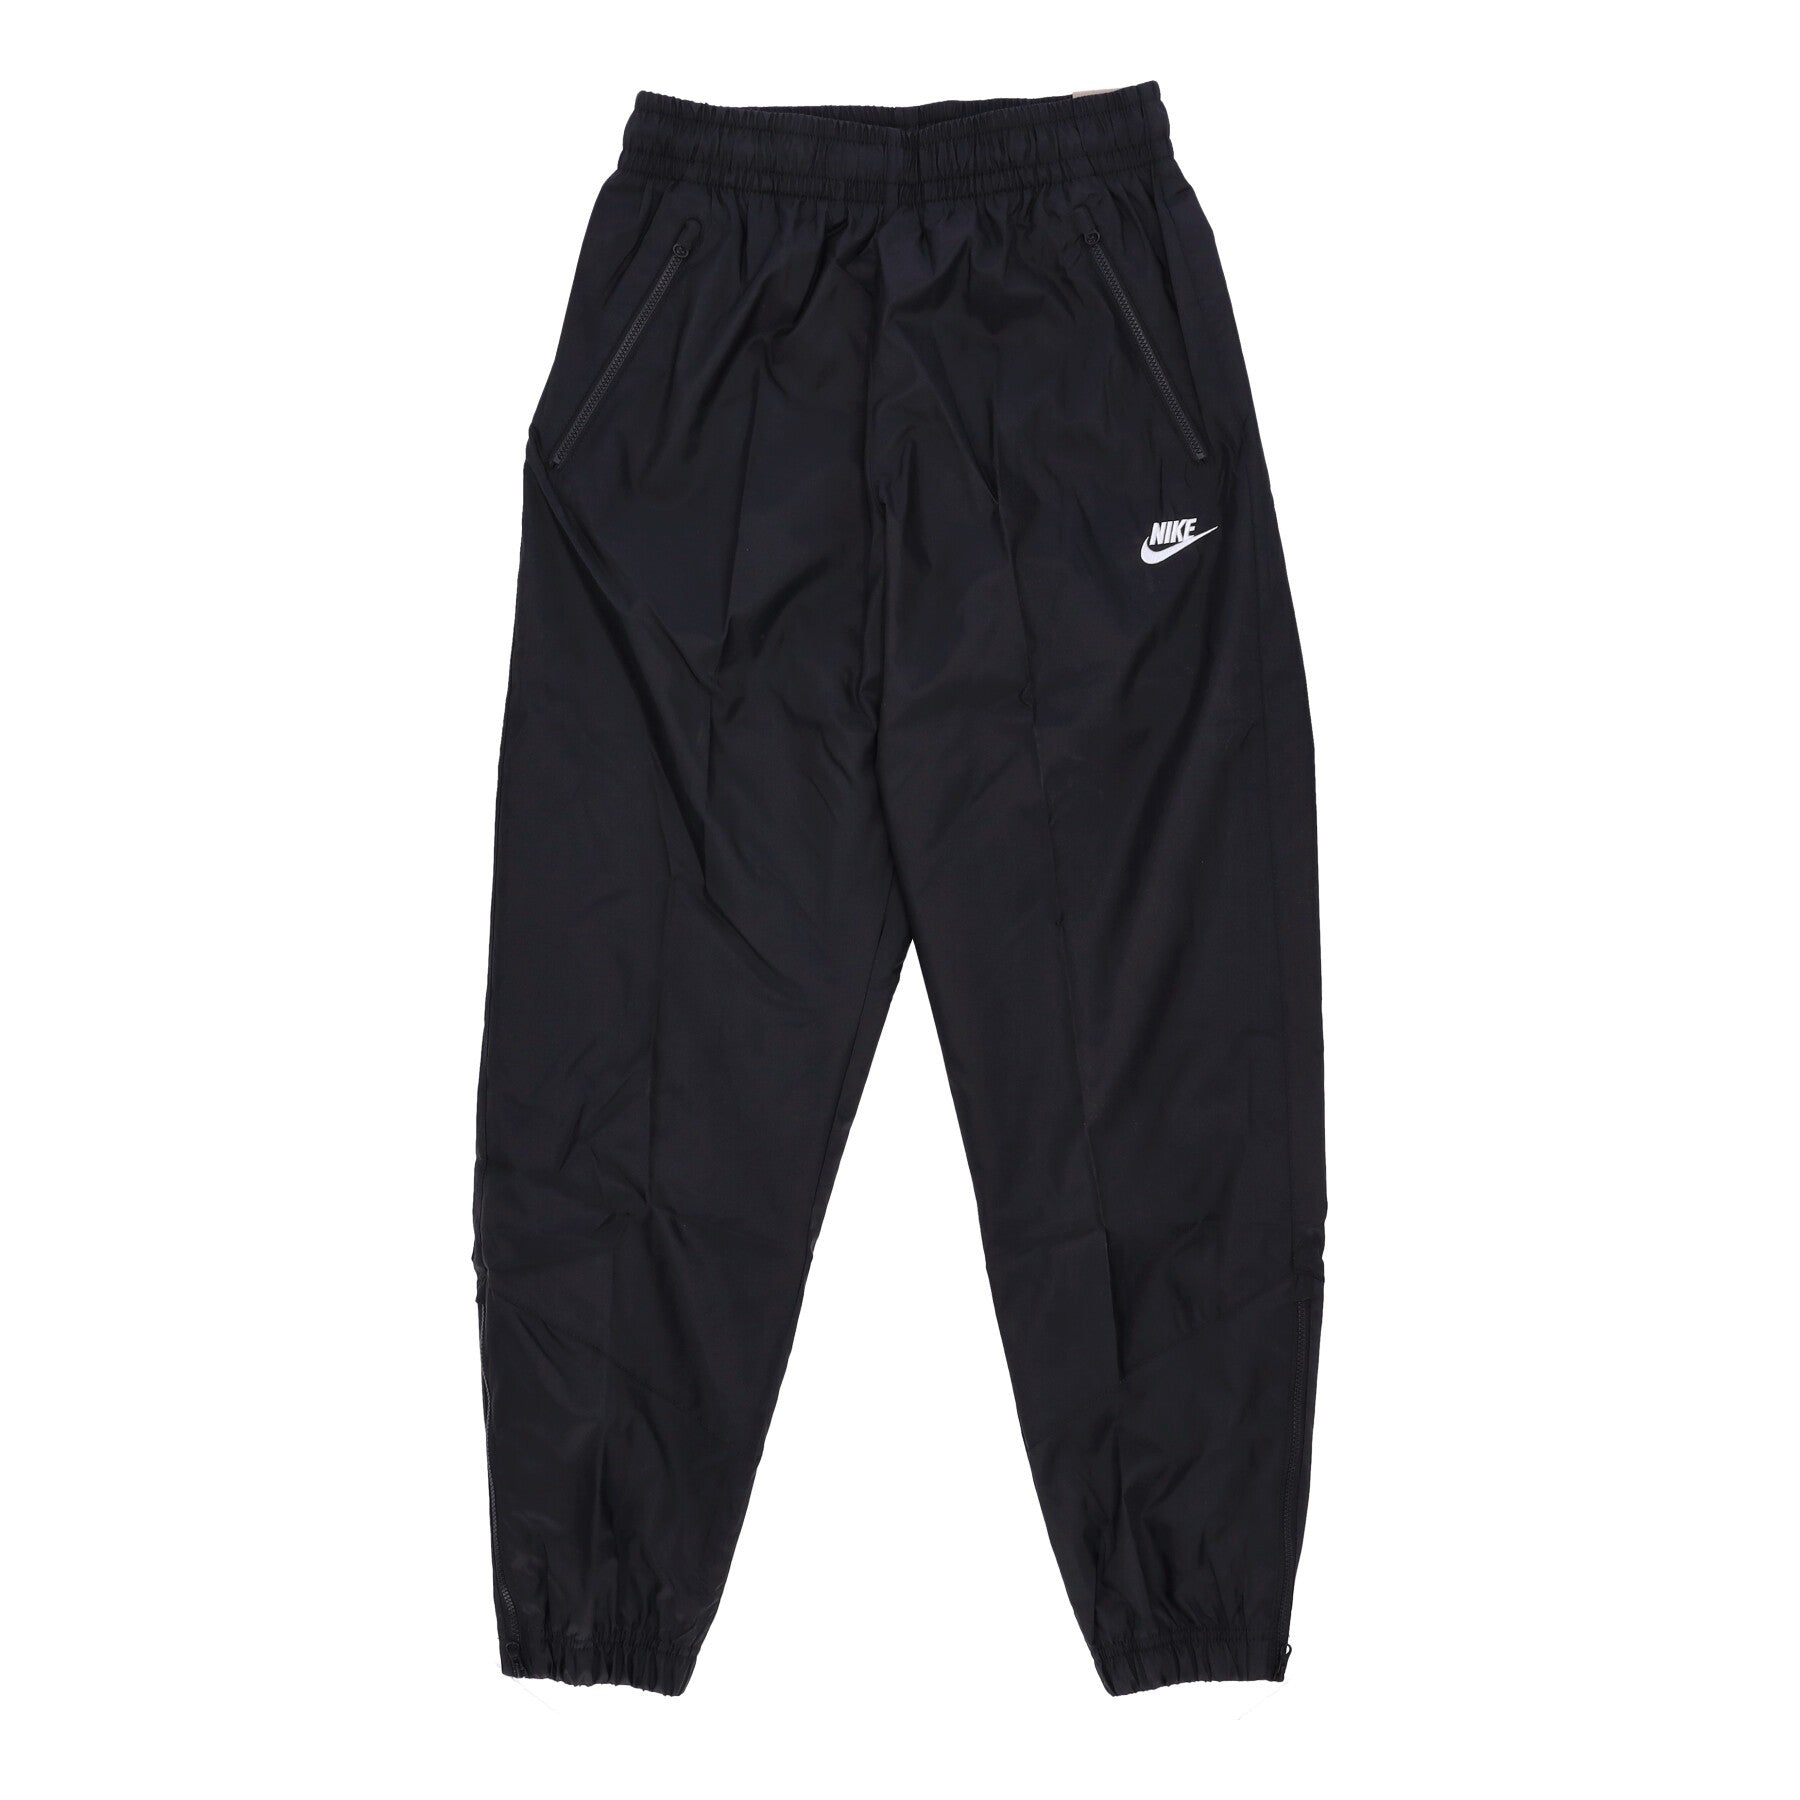 Nike, Pantalone Tuta Uomo Windrunner Woven Lined Pants, Black/black/white